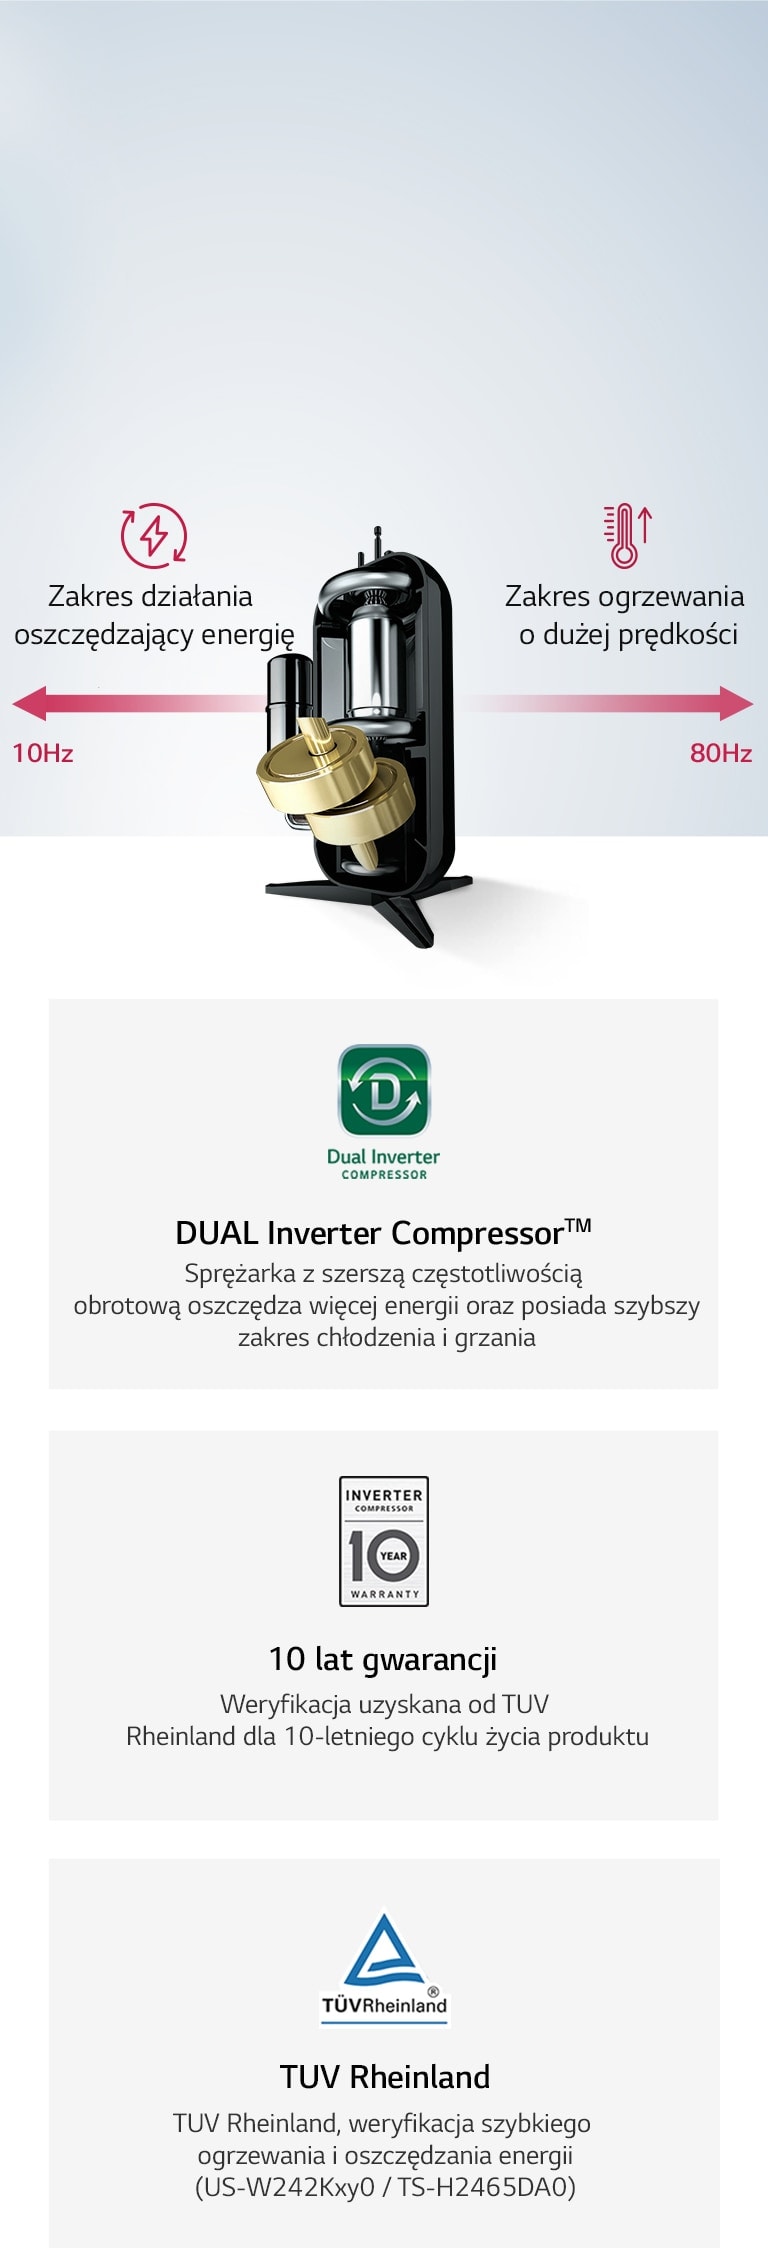 DUAL Inverter Compressor